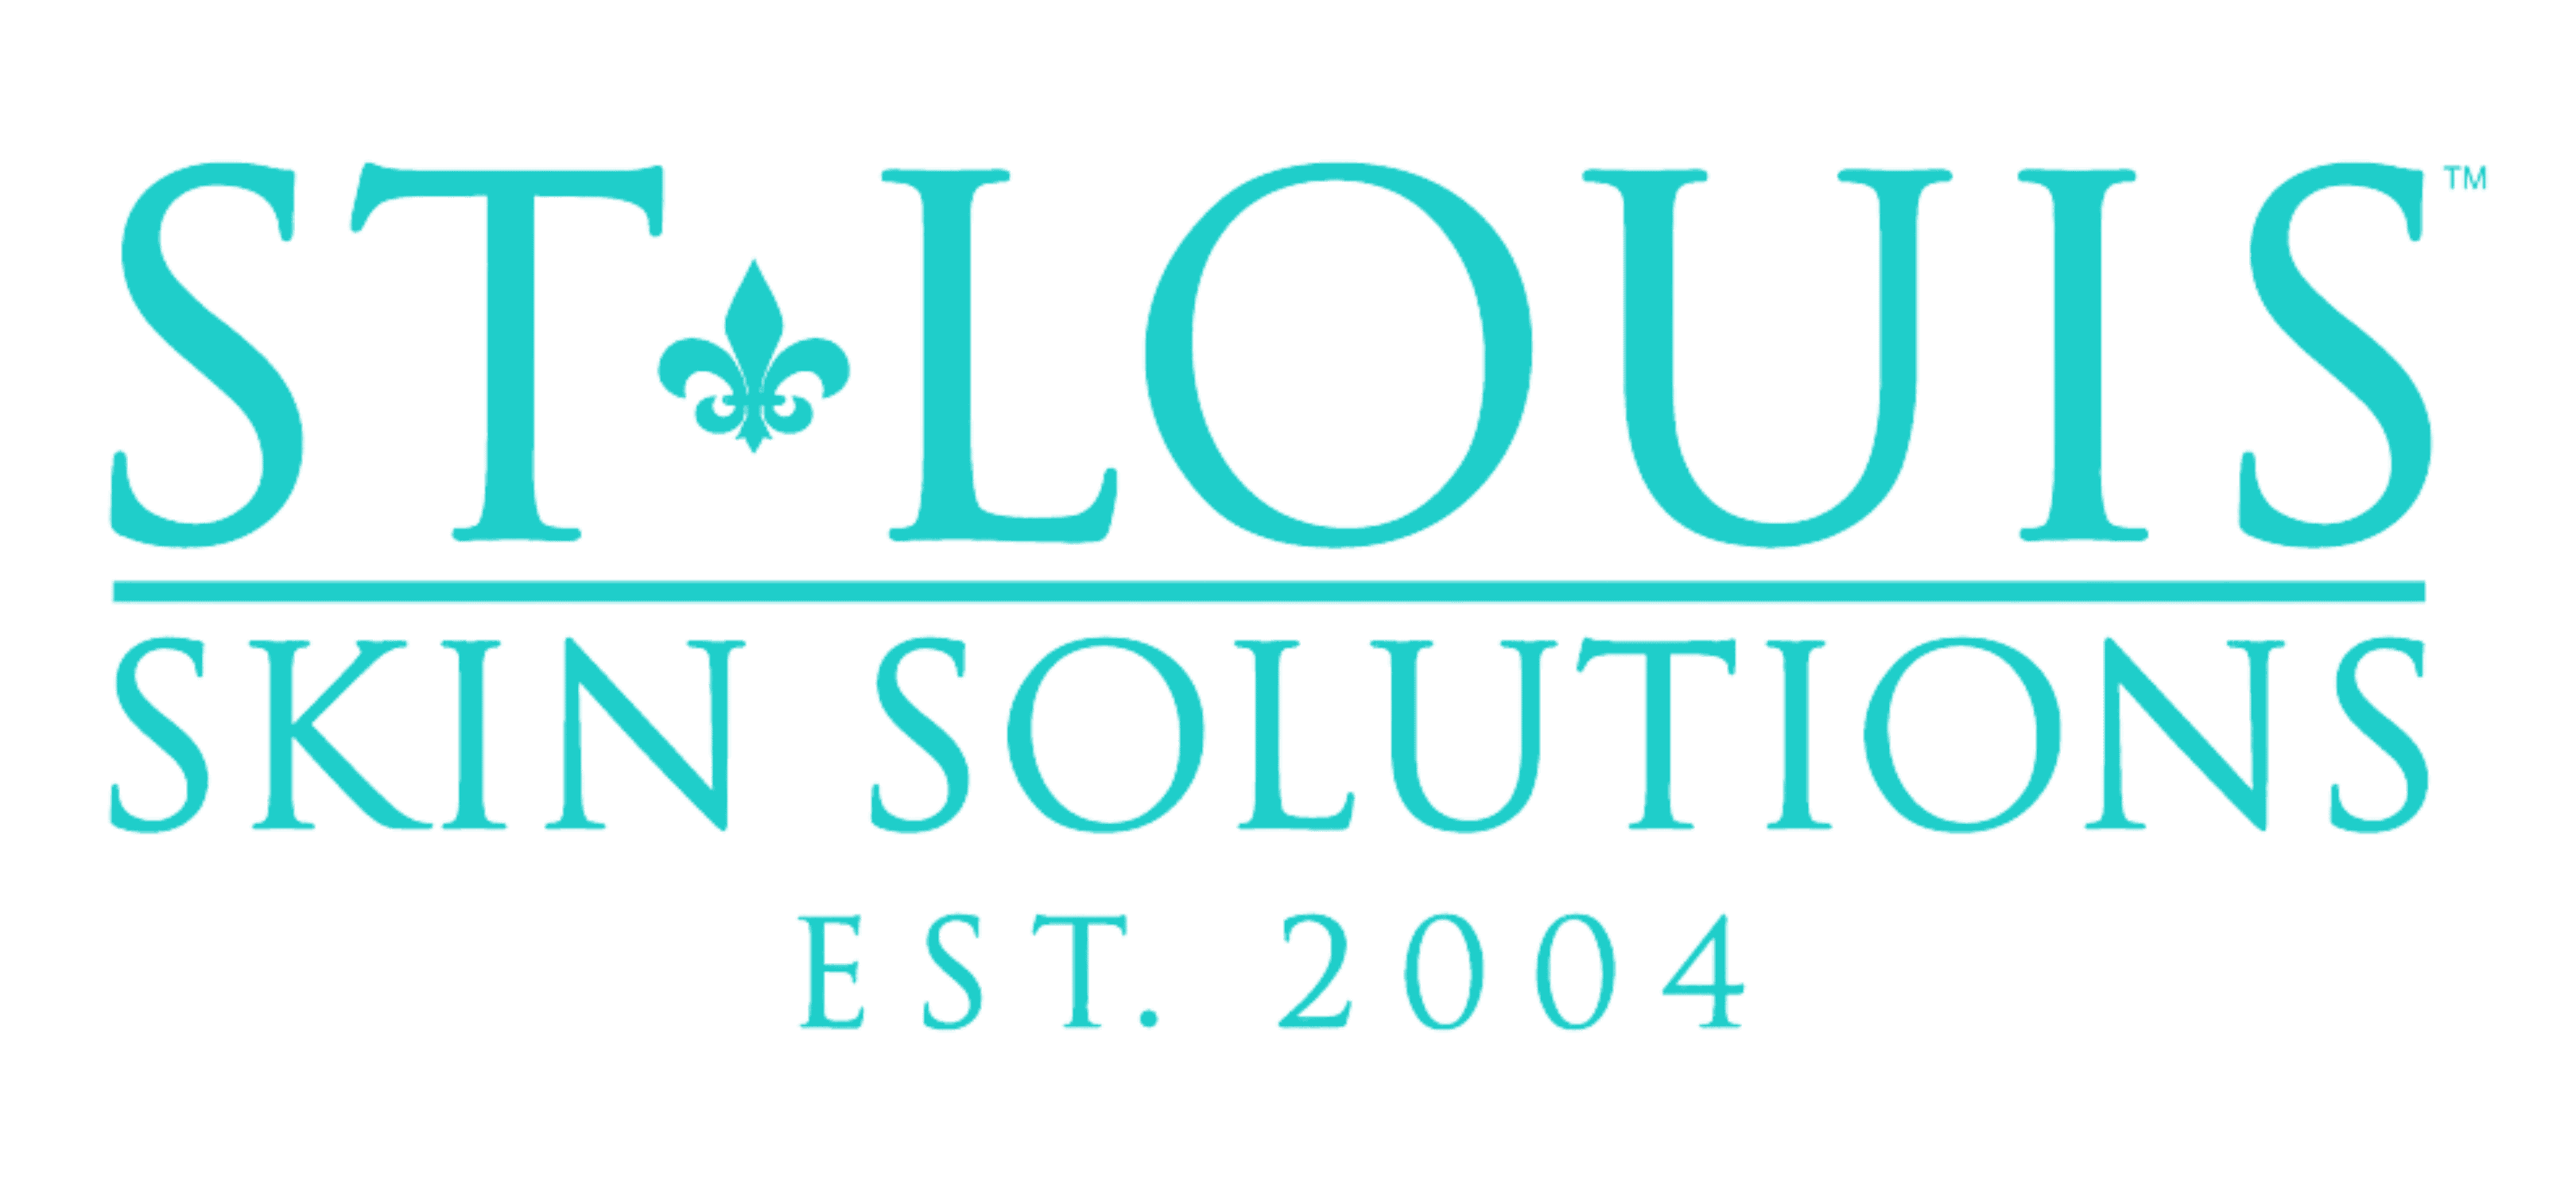 St Louis Skin Solutions logo in teal 3240 x 1500 pixels